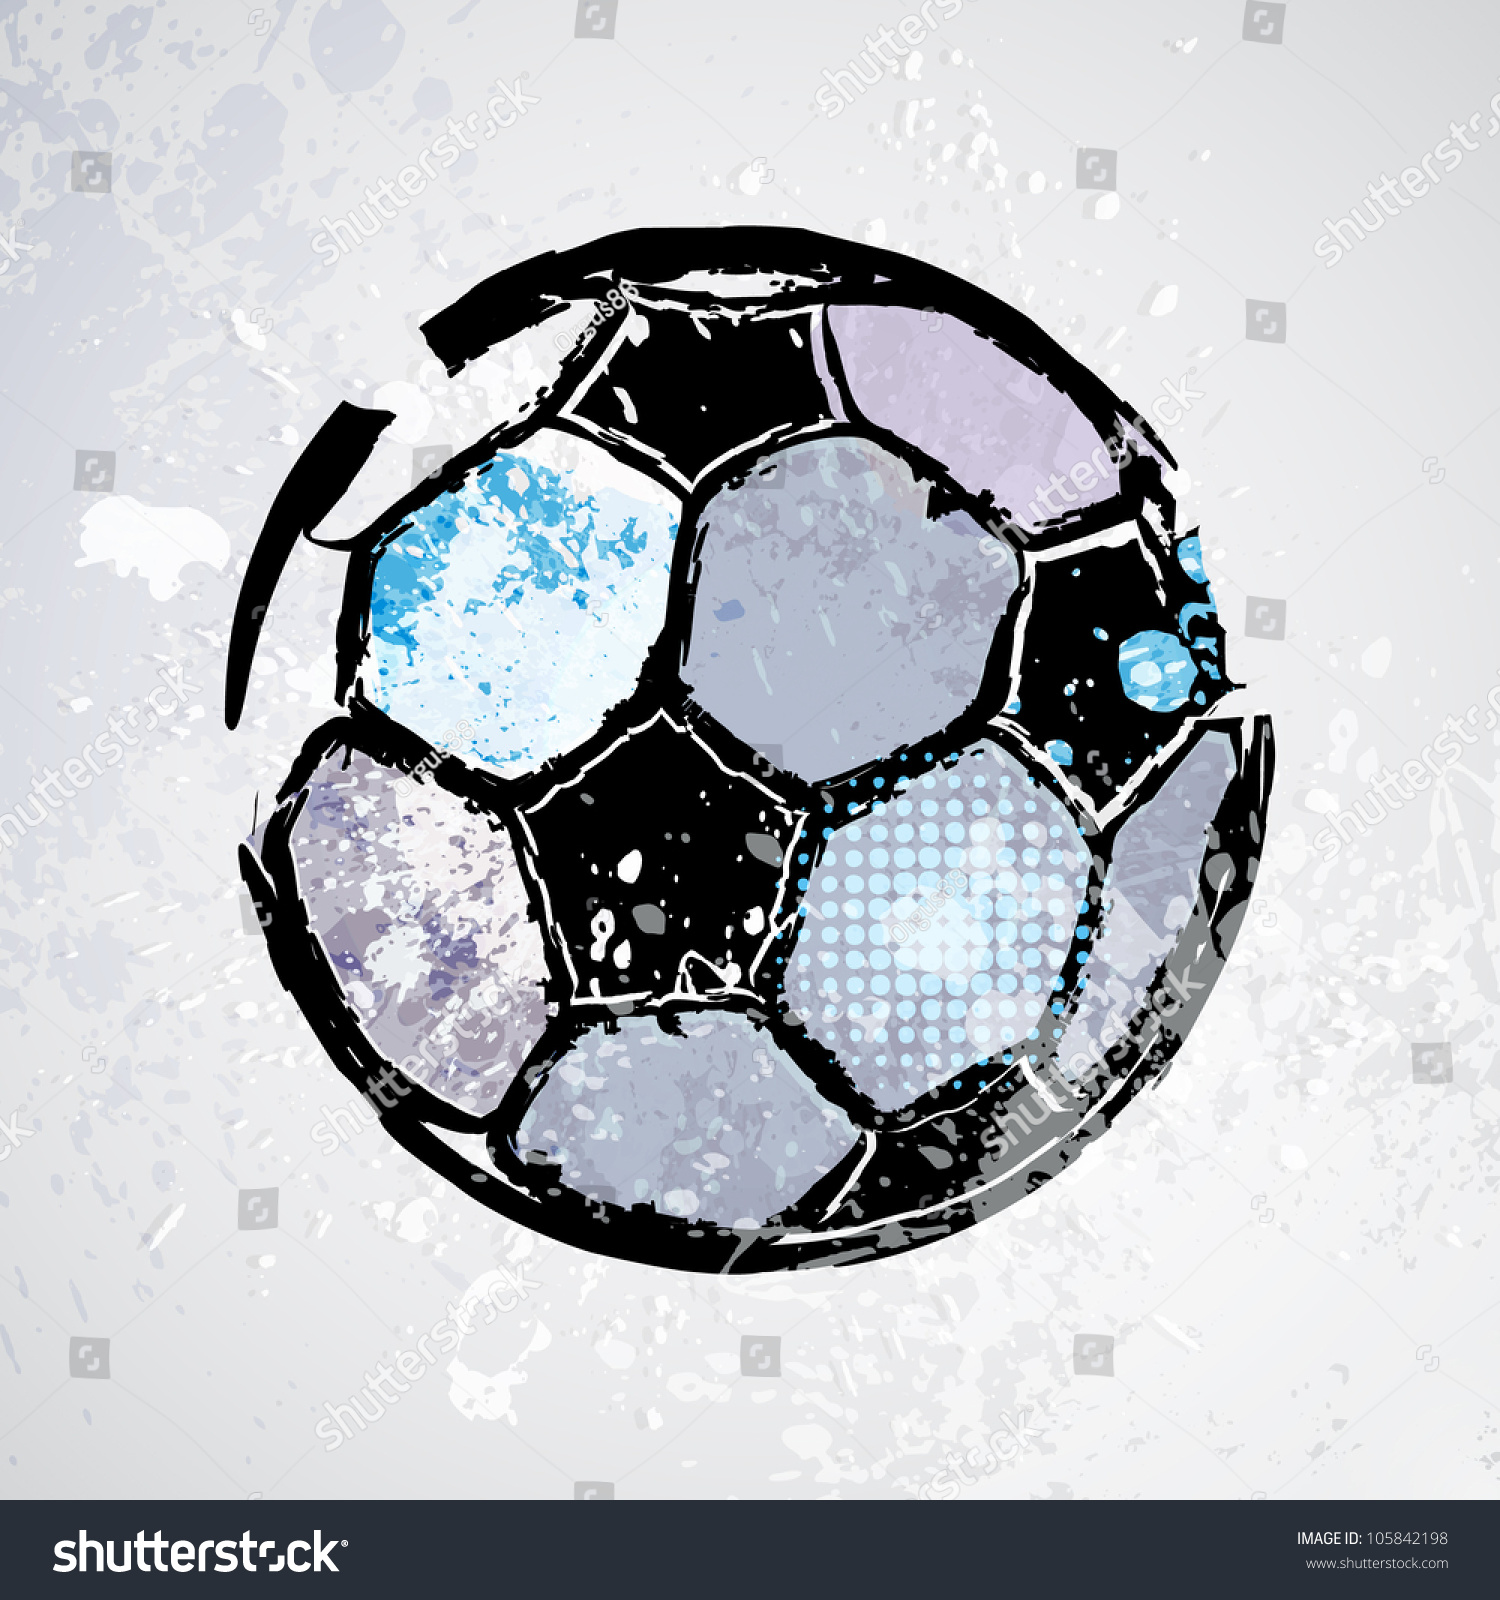 Vector Grunge Soccer Ball - 105842198 : Shutterstock